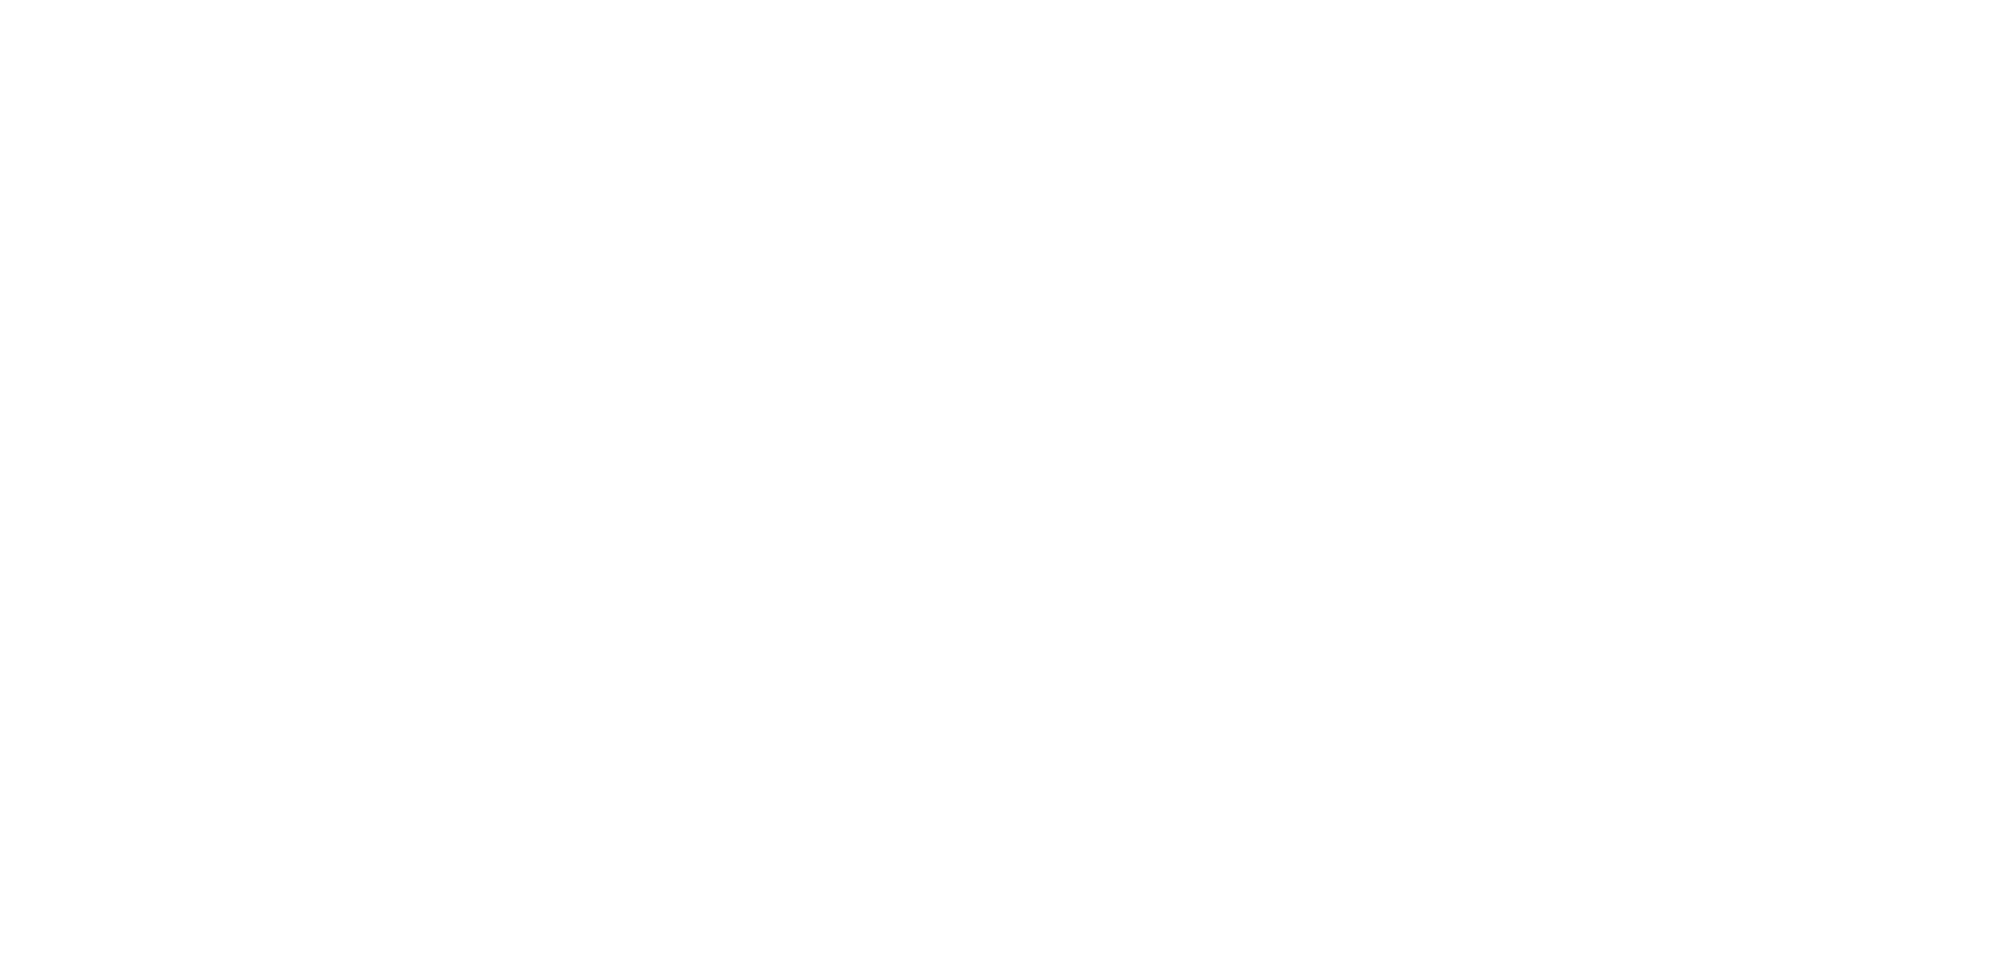 East Coast Marketing 16